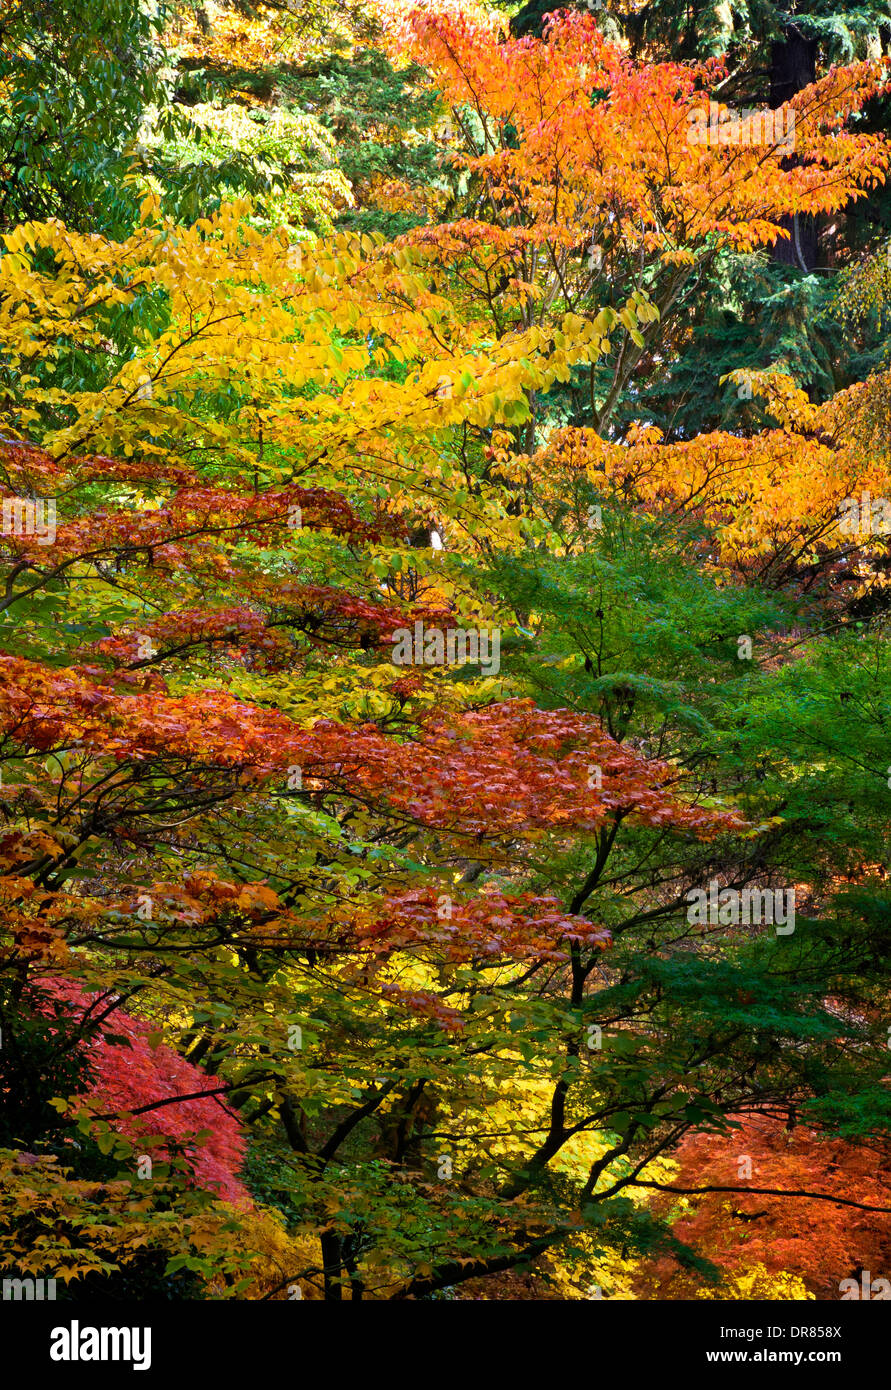 WASHINGTON - Autumn colors at Seattle's Washington Park Arboretum. Stock Photo